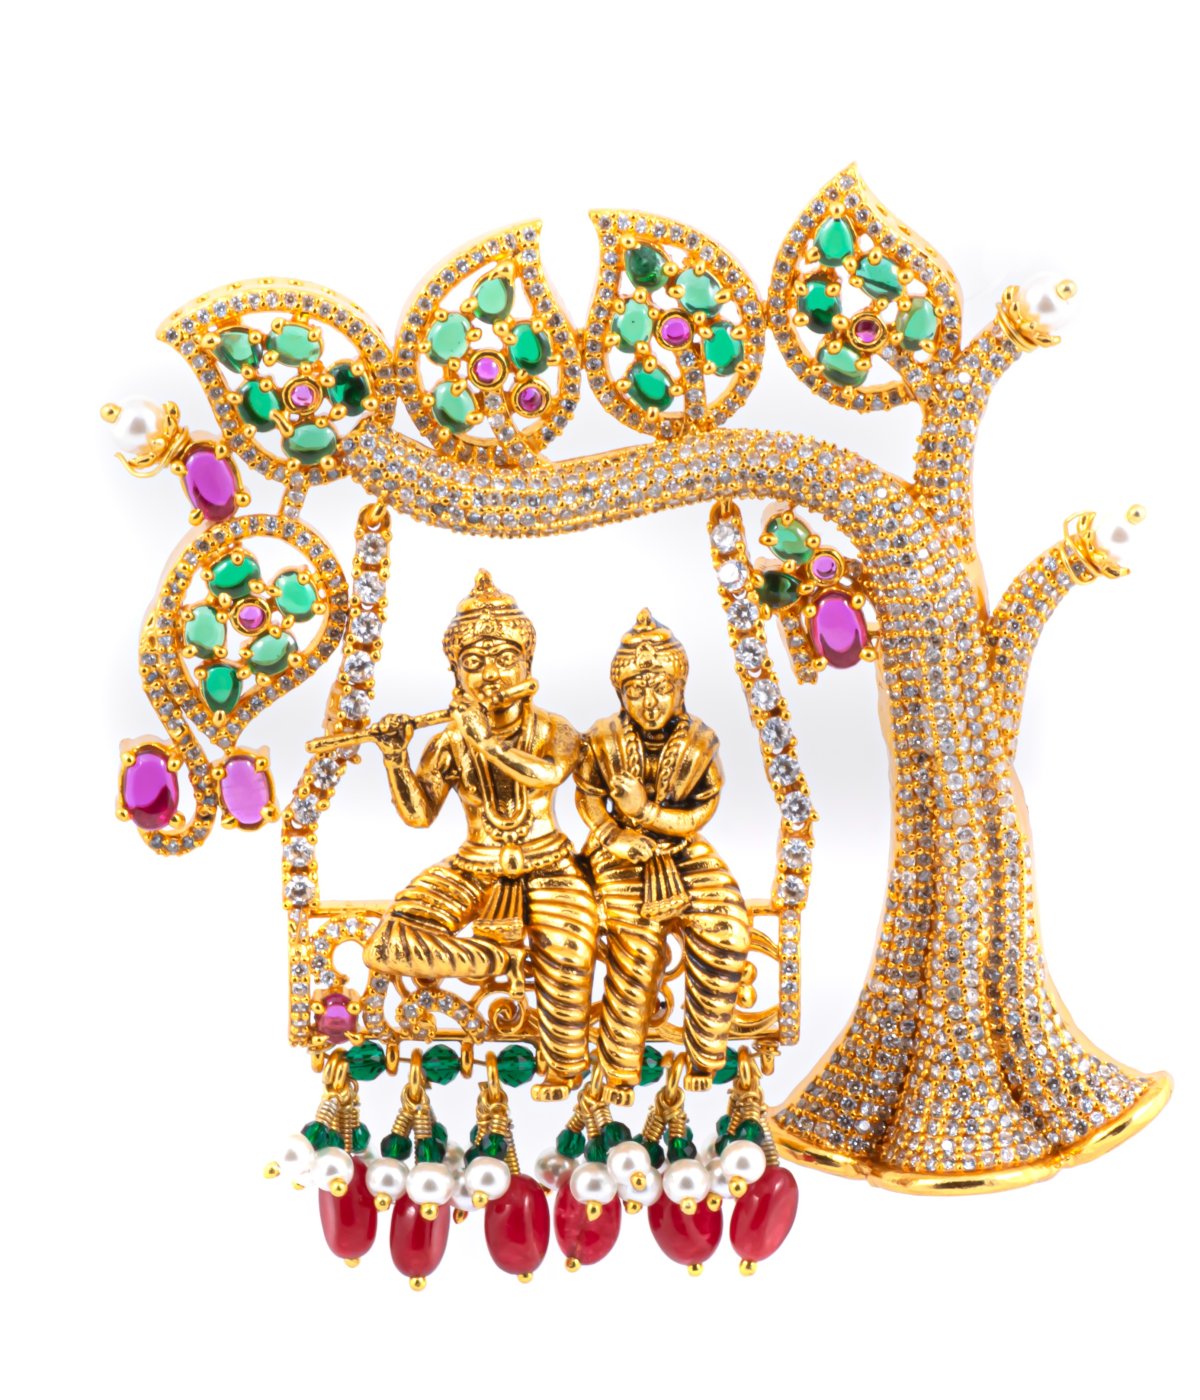  Lord Radha Krishna GOLD POLISH Finish Idol Religious Idol-Statue WITH GREEN STONE STUD 